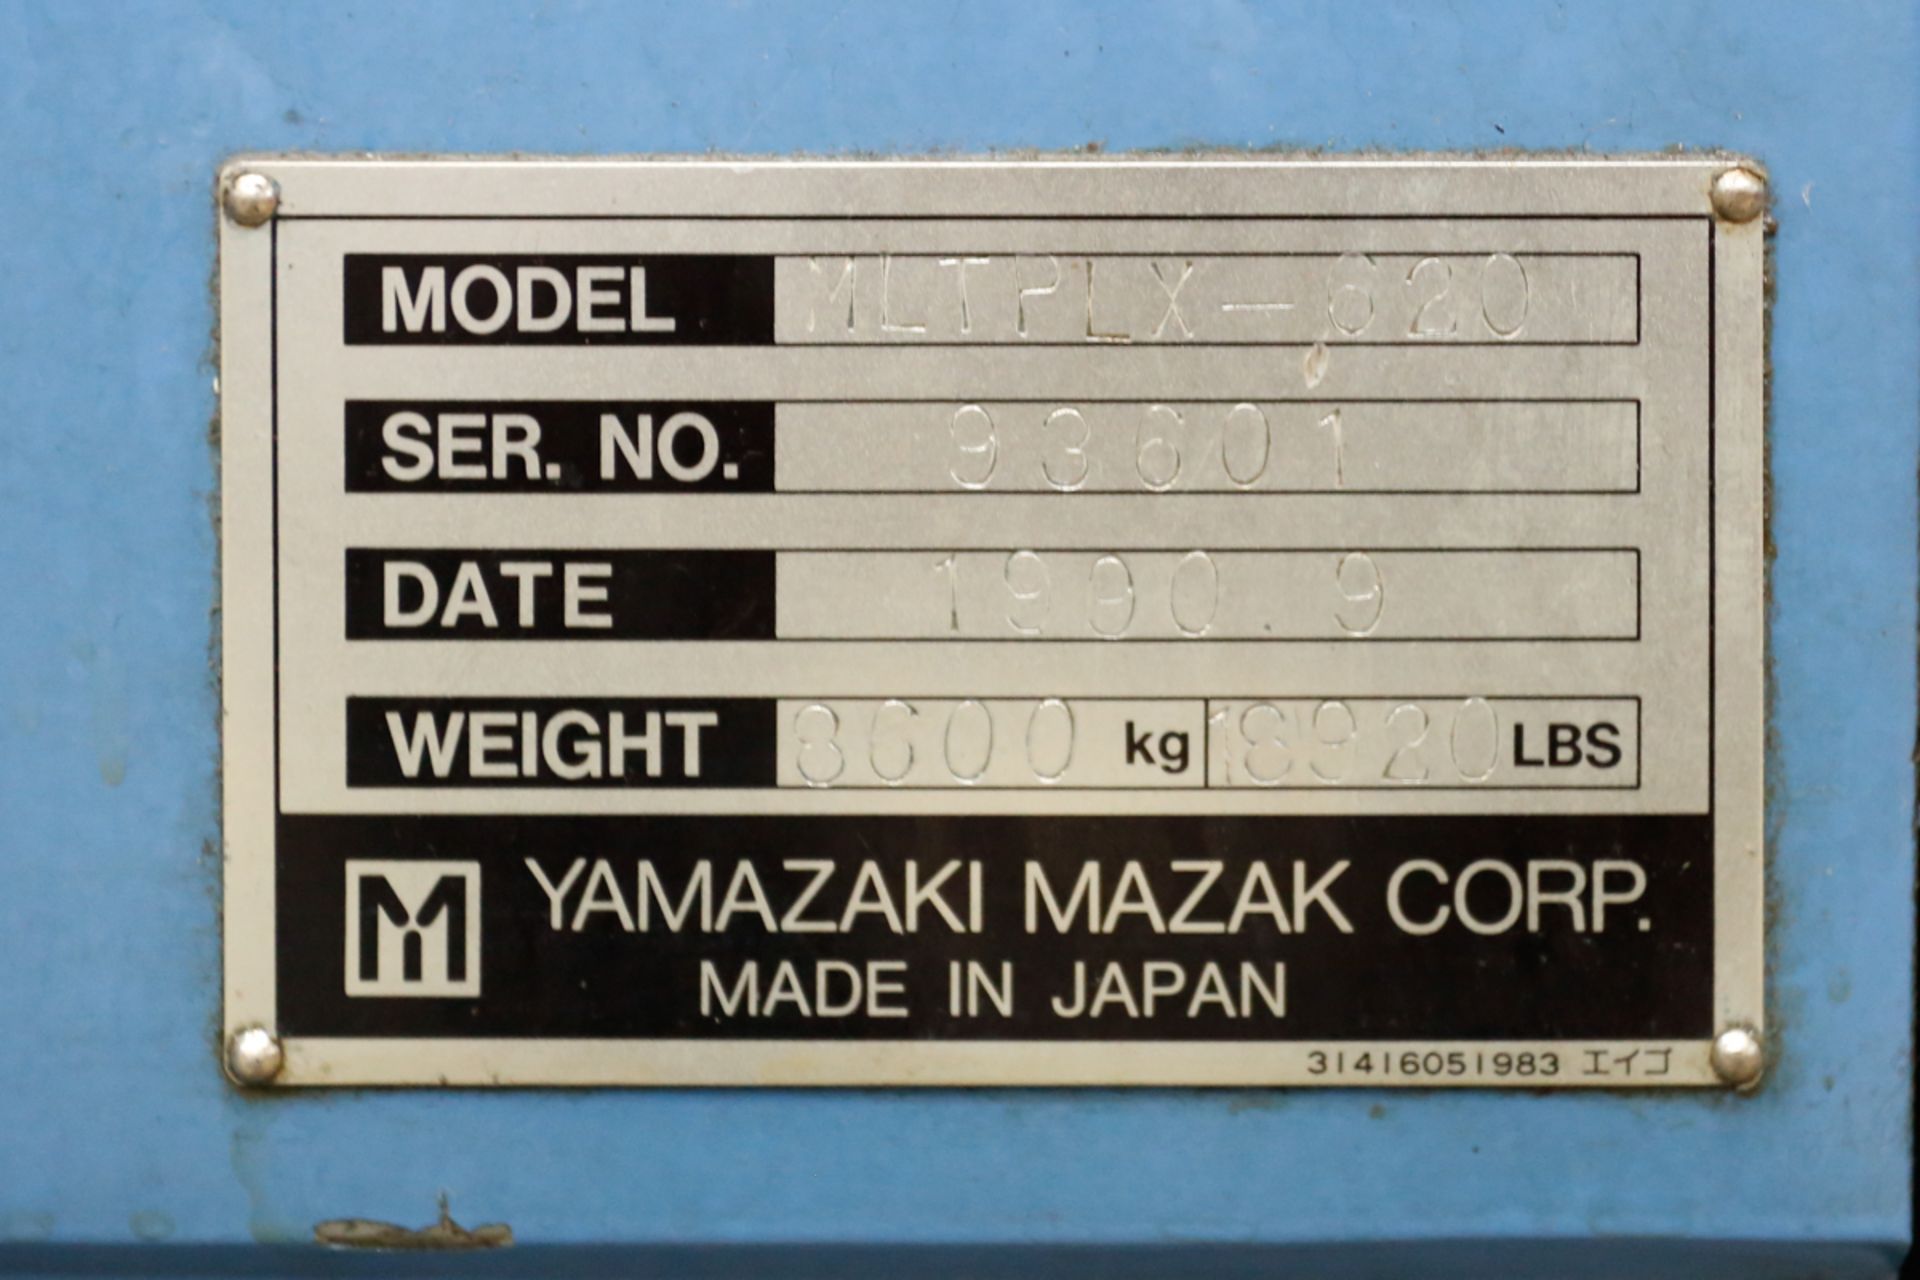 1990 MAZAK 2 AXIS DUAL SPINDLE TURNING CENTER MODEL MULTIPLEX 620 / GL100, S/N 93601, MAZATROL T32-6 - Image 11 of 15